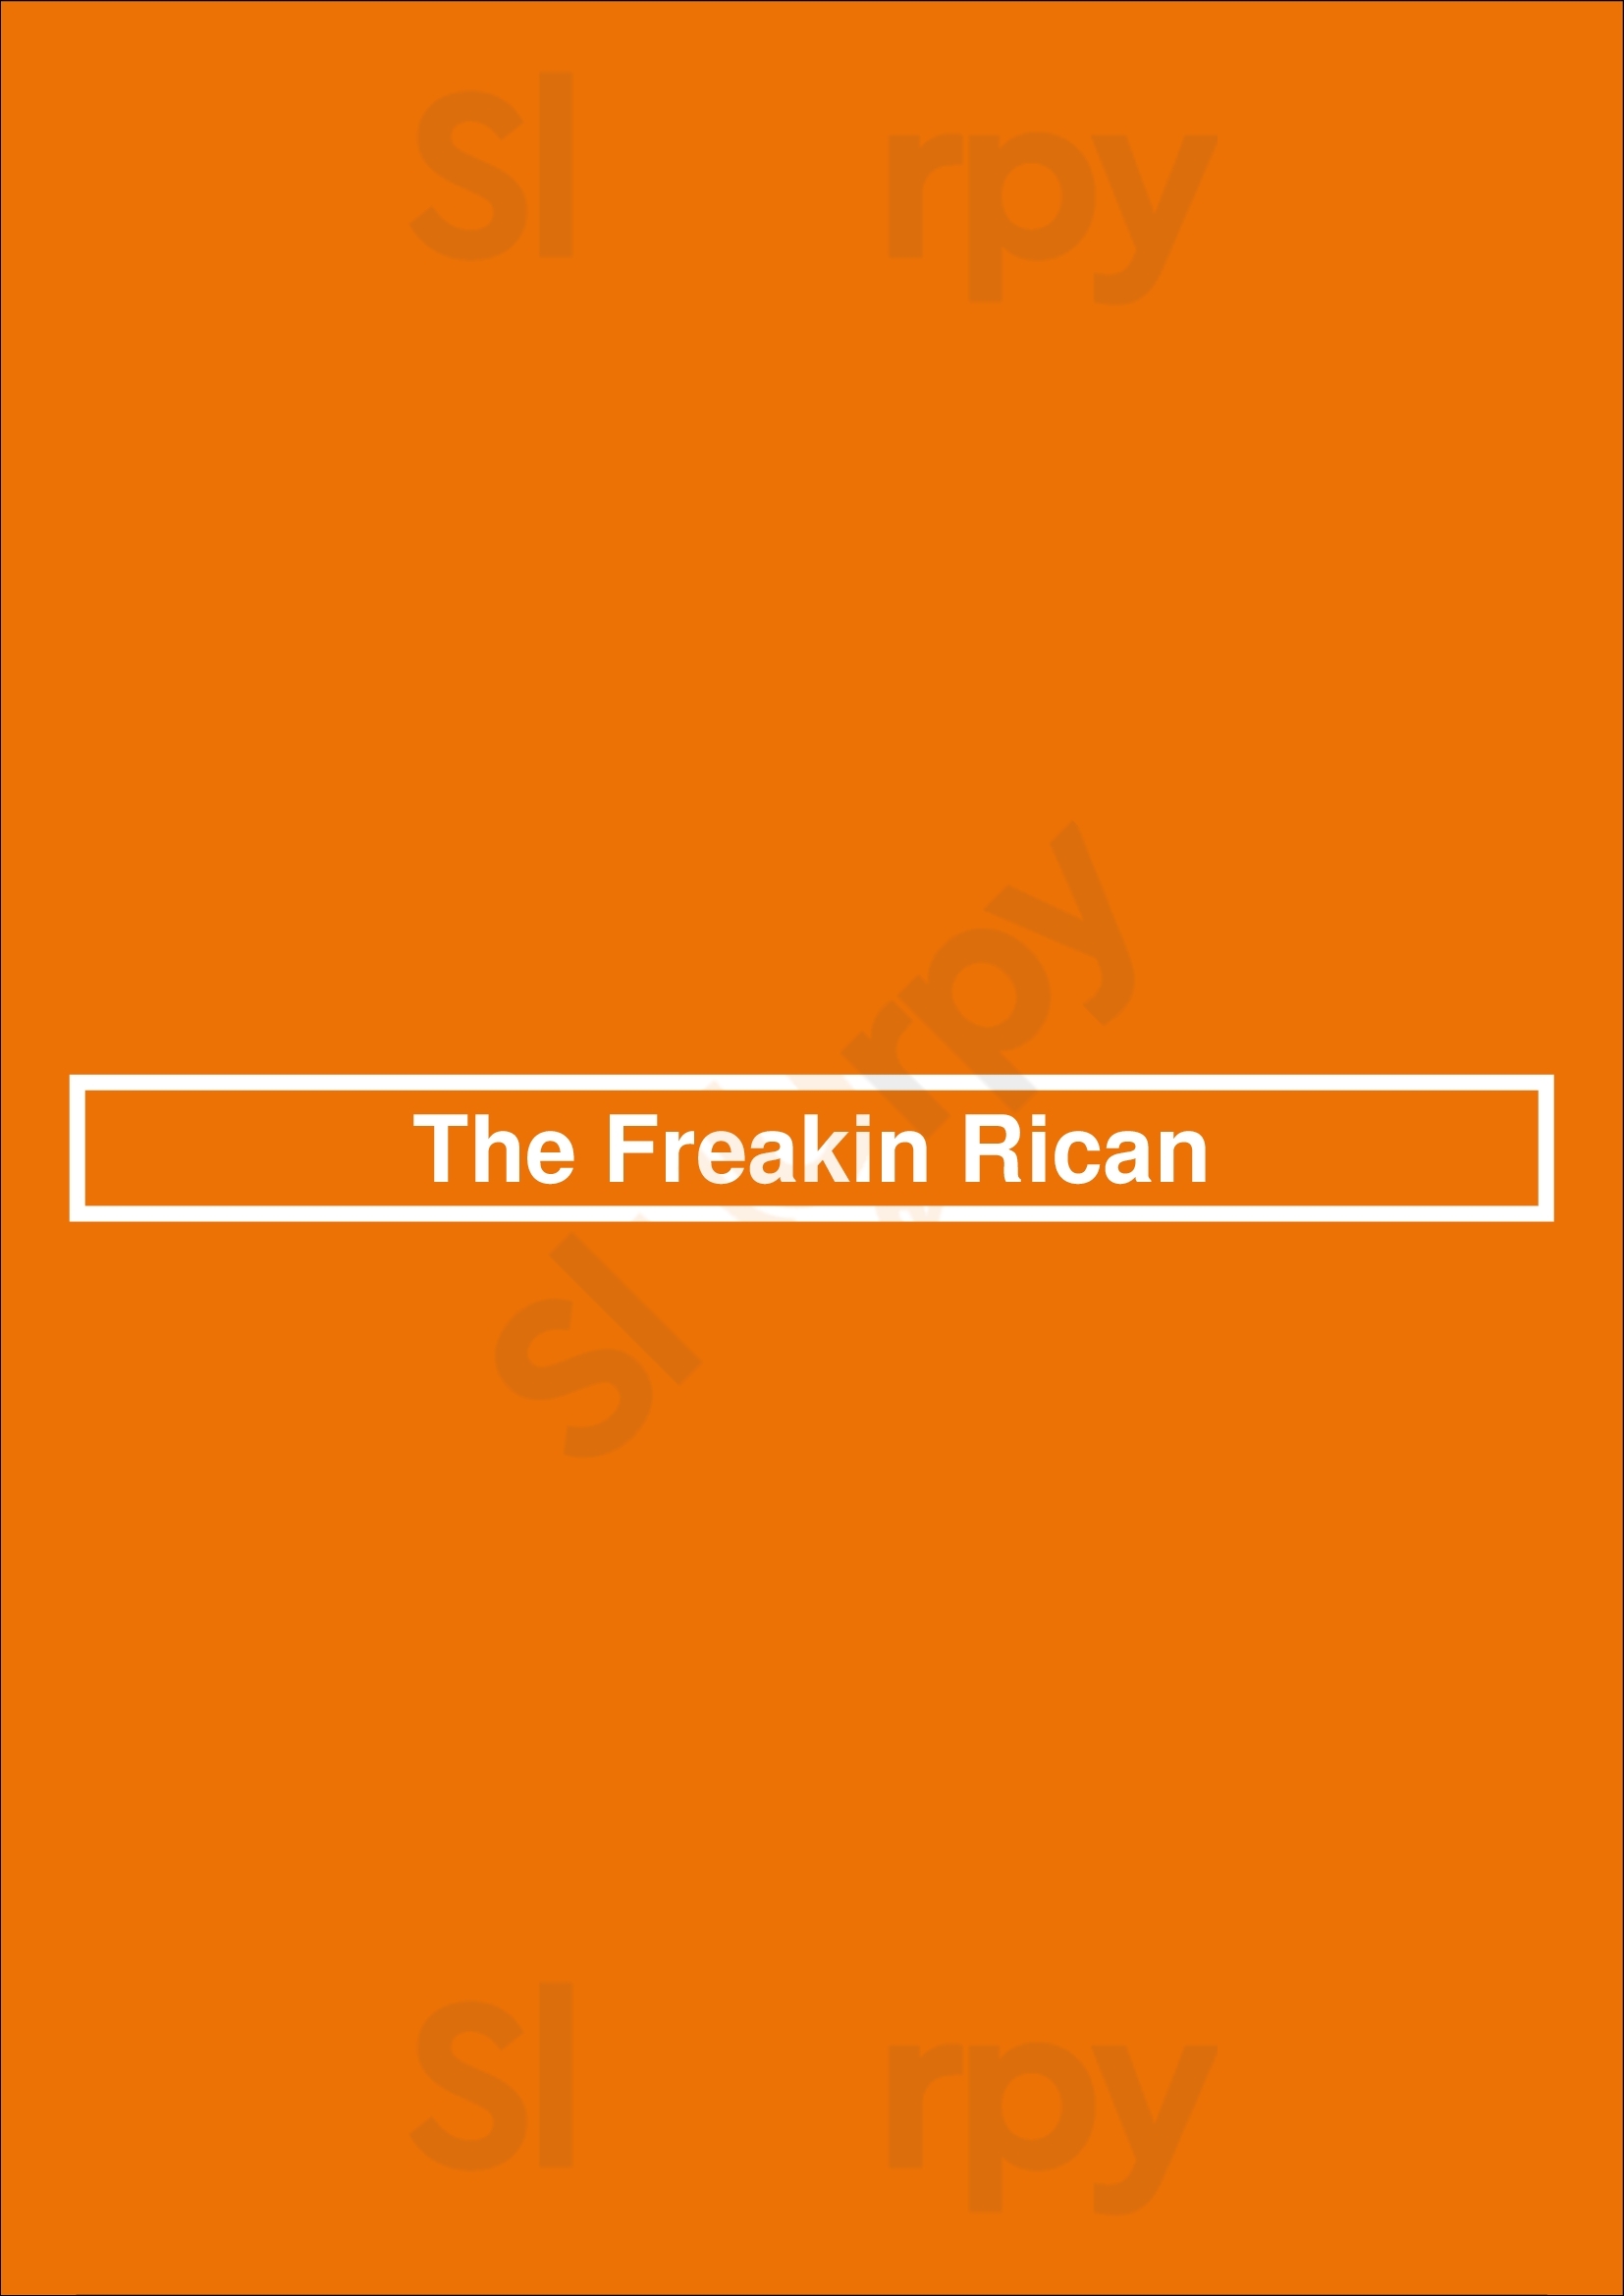 The Freakin Rican Astoria Menu - 1